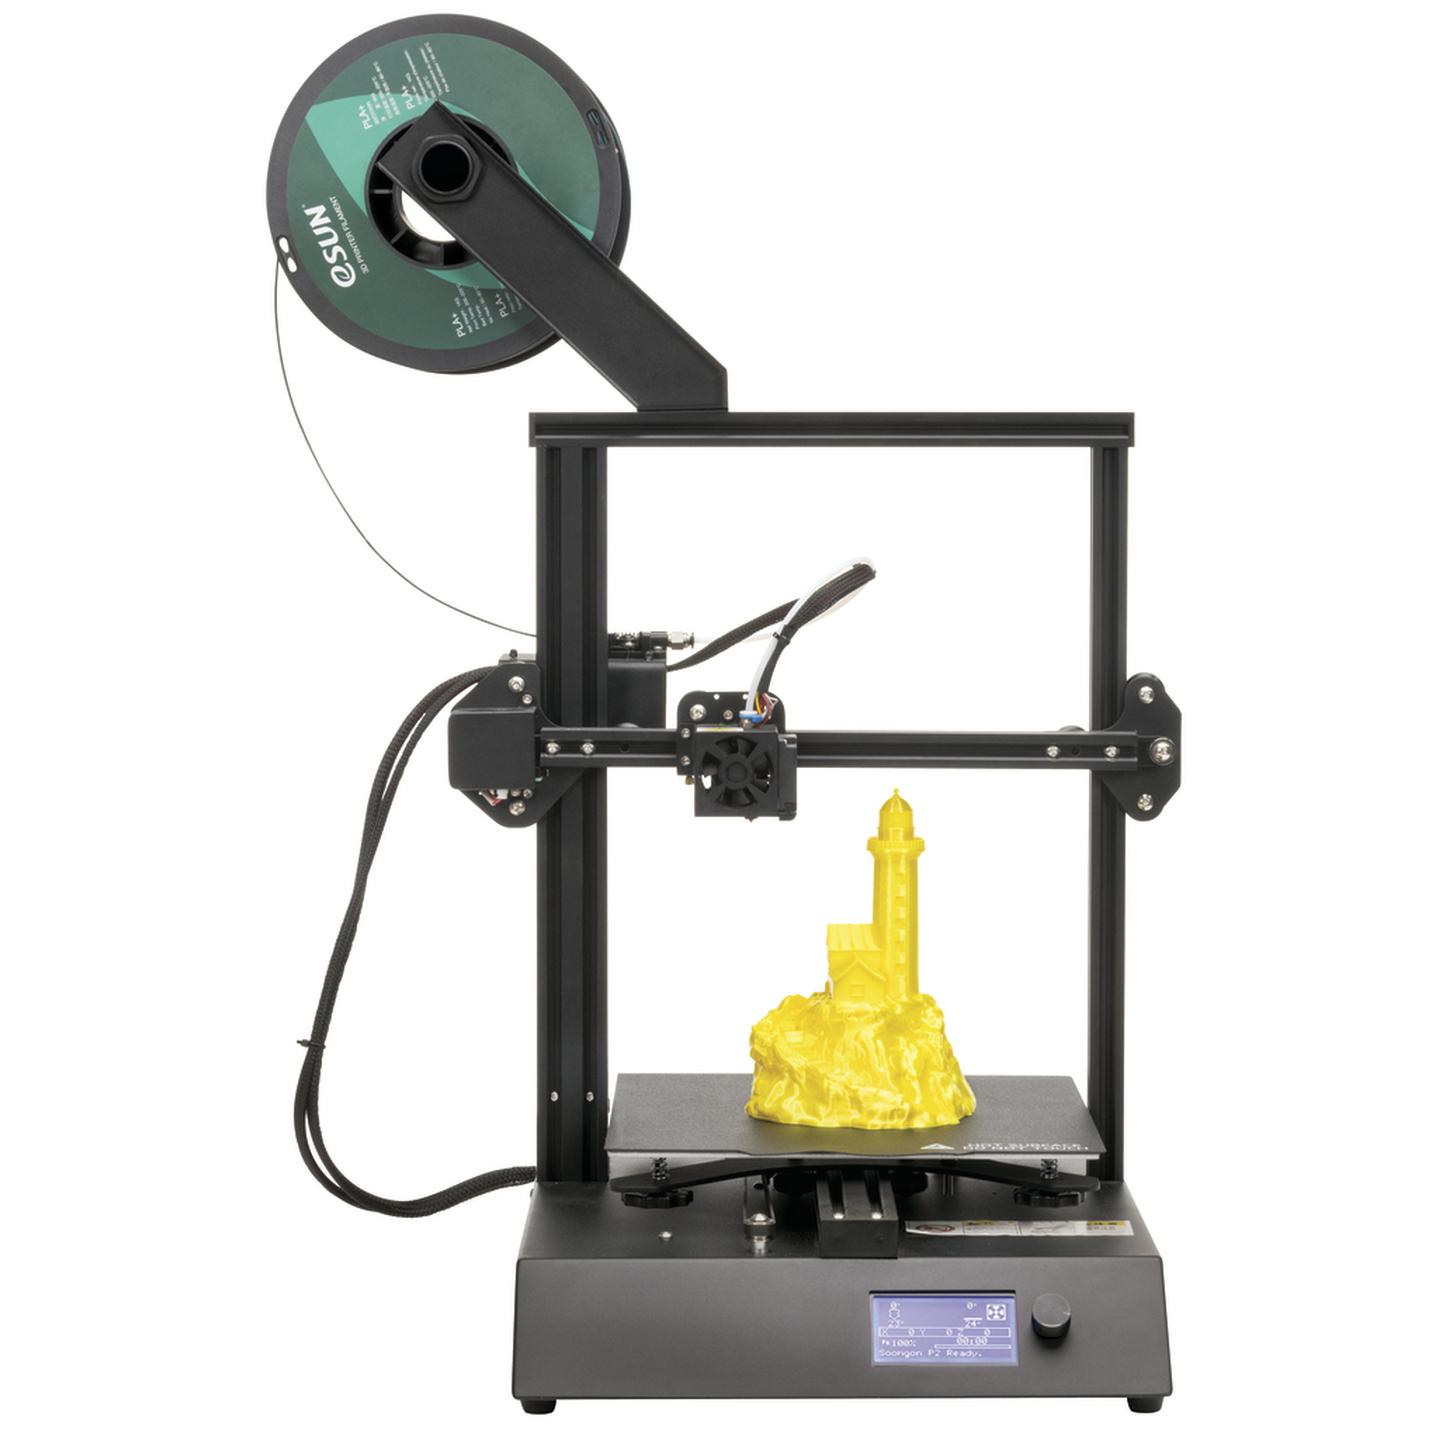 Protech Economy 3D Printer - 260 x 260 x 260 Build Volume